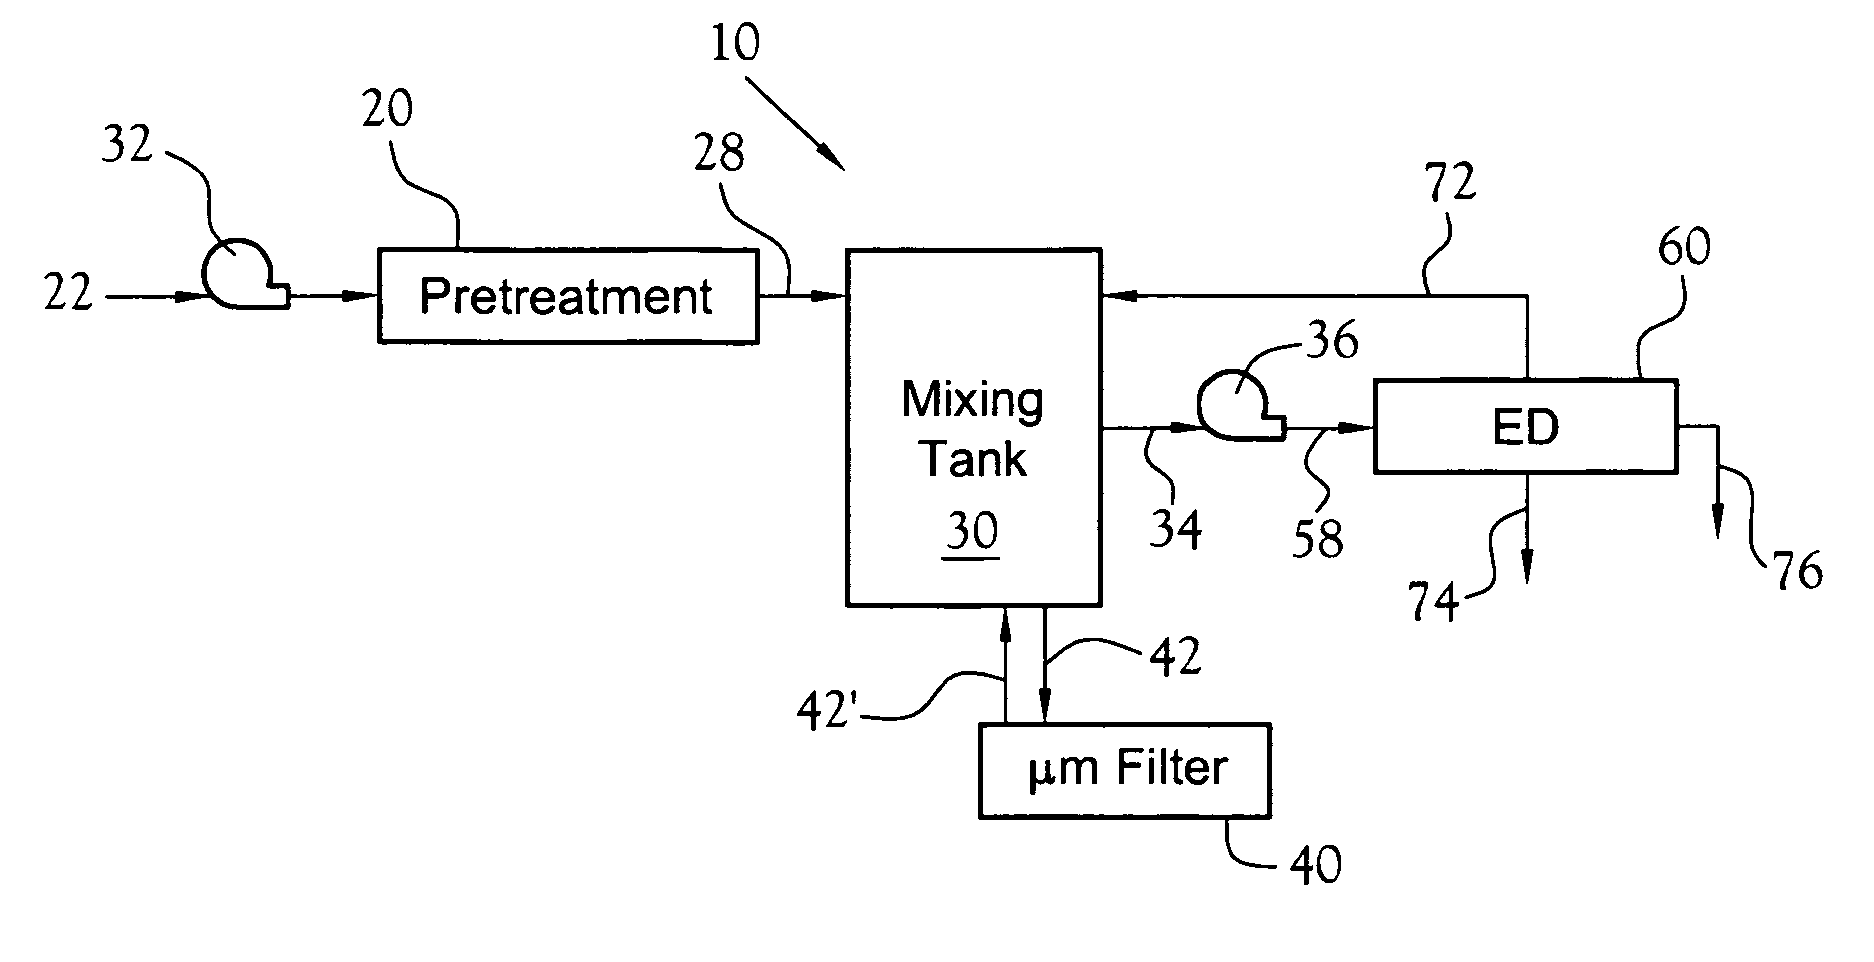 Integrated electro-pressure membrane deionization system